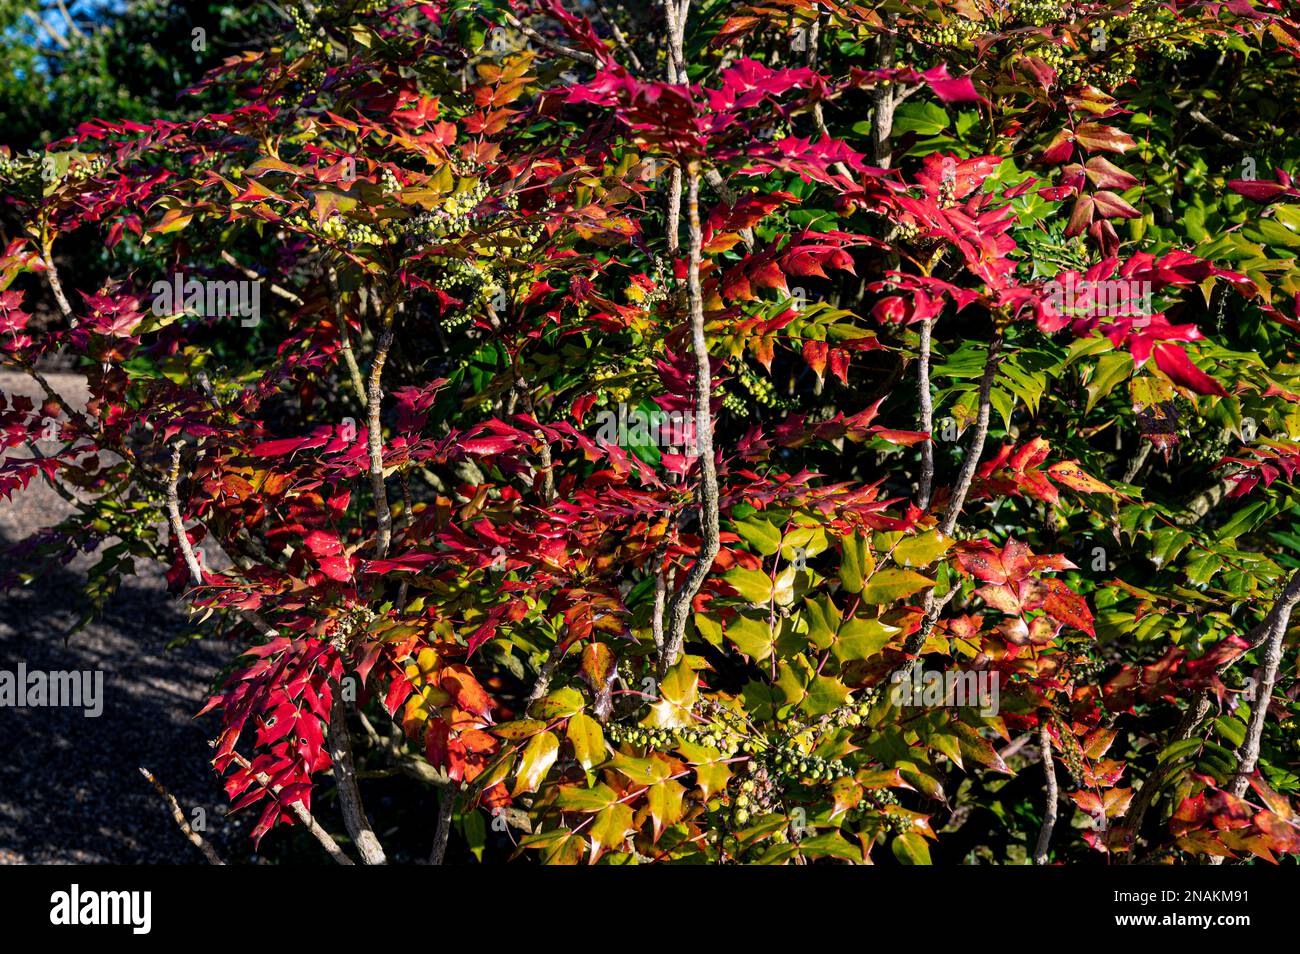 Mahonia Bealei, Beals mahonia, Berberis bealei, ,Mahonia japonica Bealei Group, Berberidaceae. Colourful leaves in late Autumn/ early Winter. Stock Photo